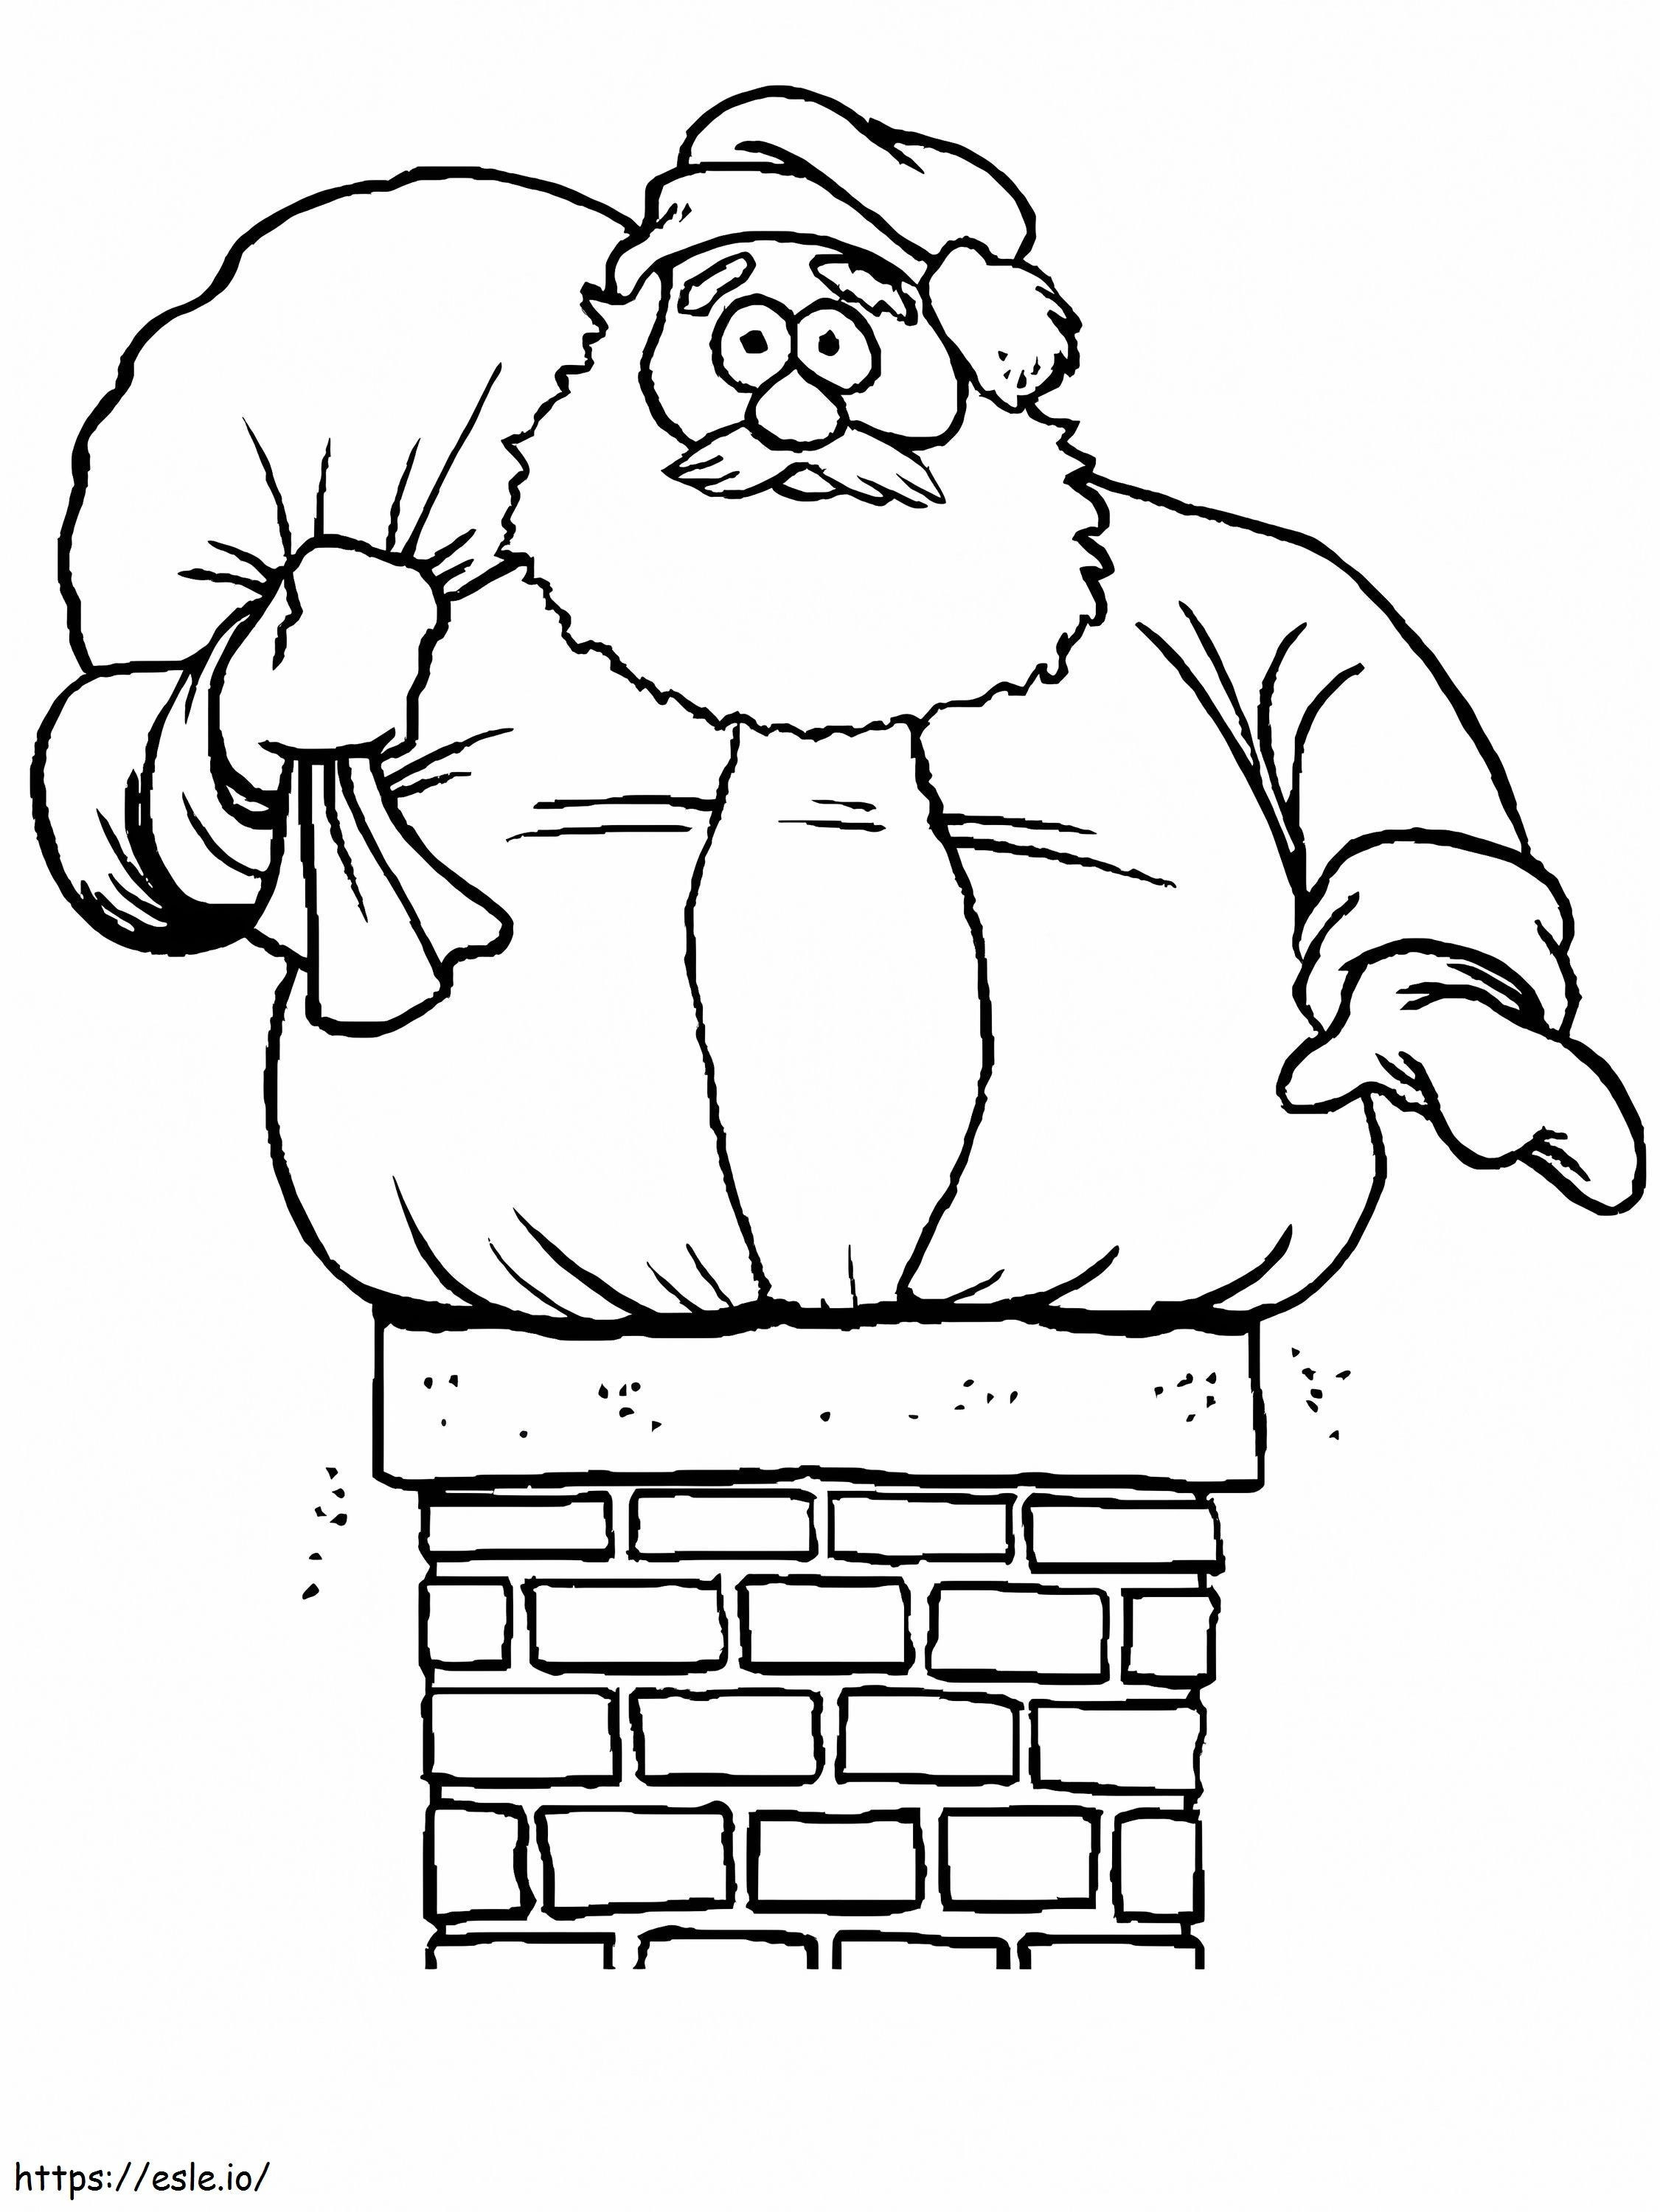 Super Fat Santa Claus coloring page